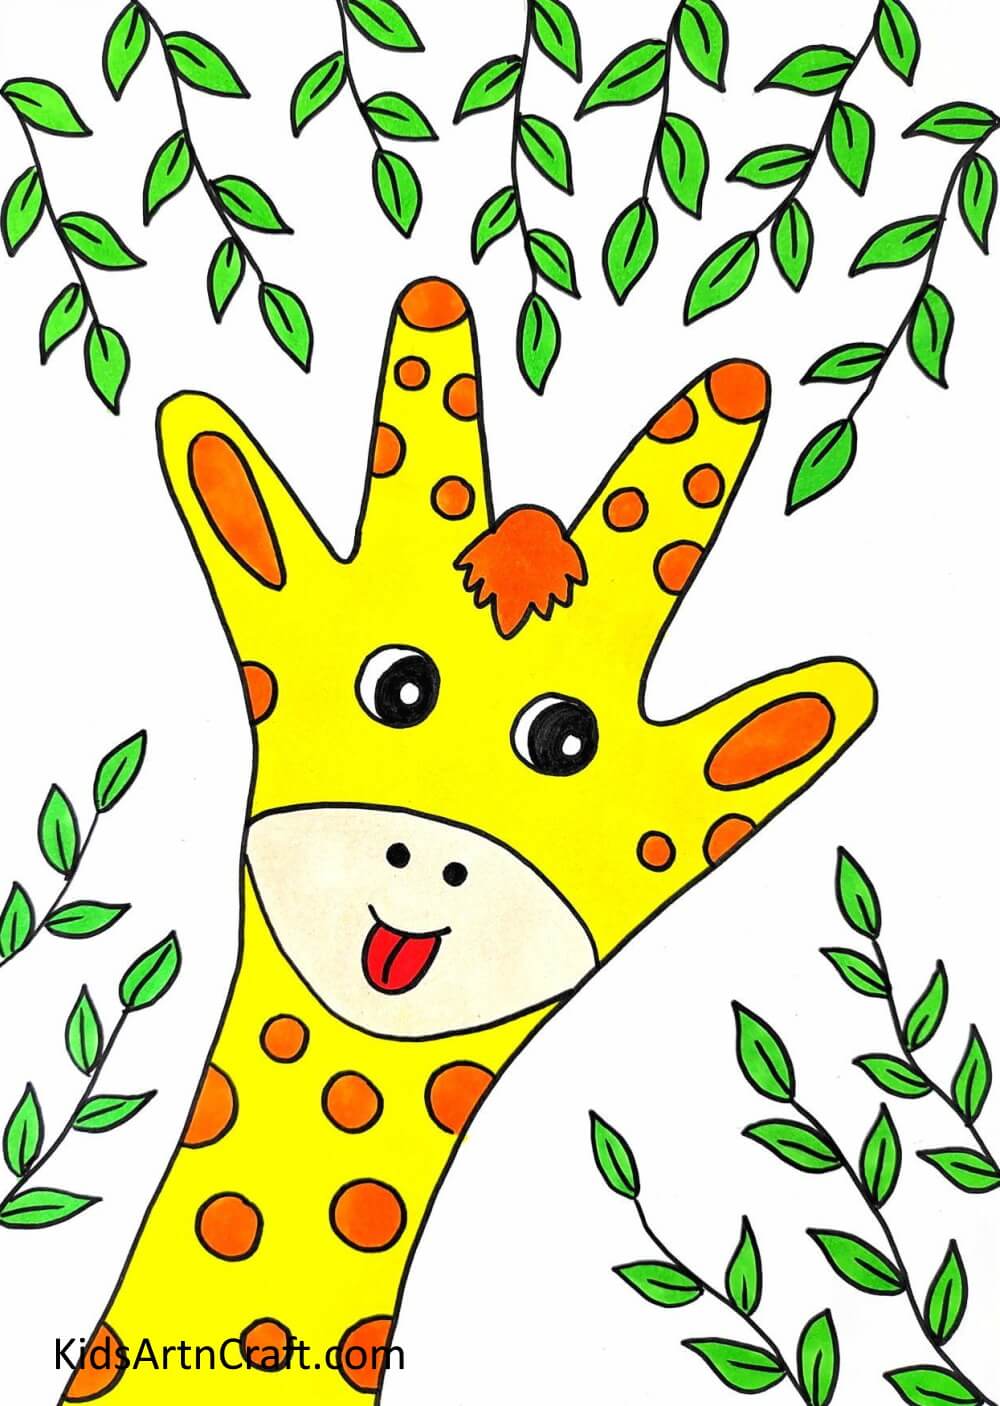 Coloring The Giraffe - Drawing a Giraffe Handprint is made straightforward and entertaining! 